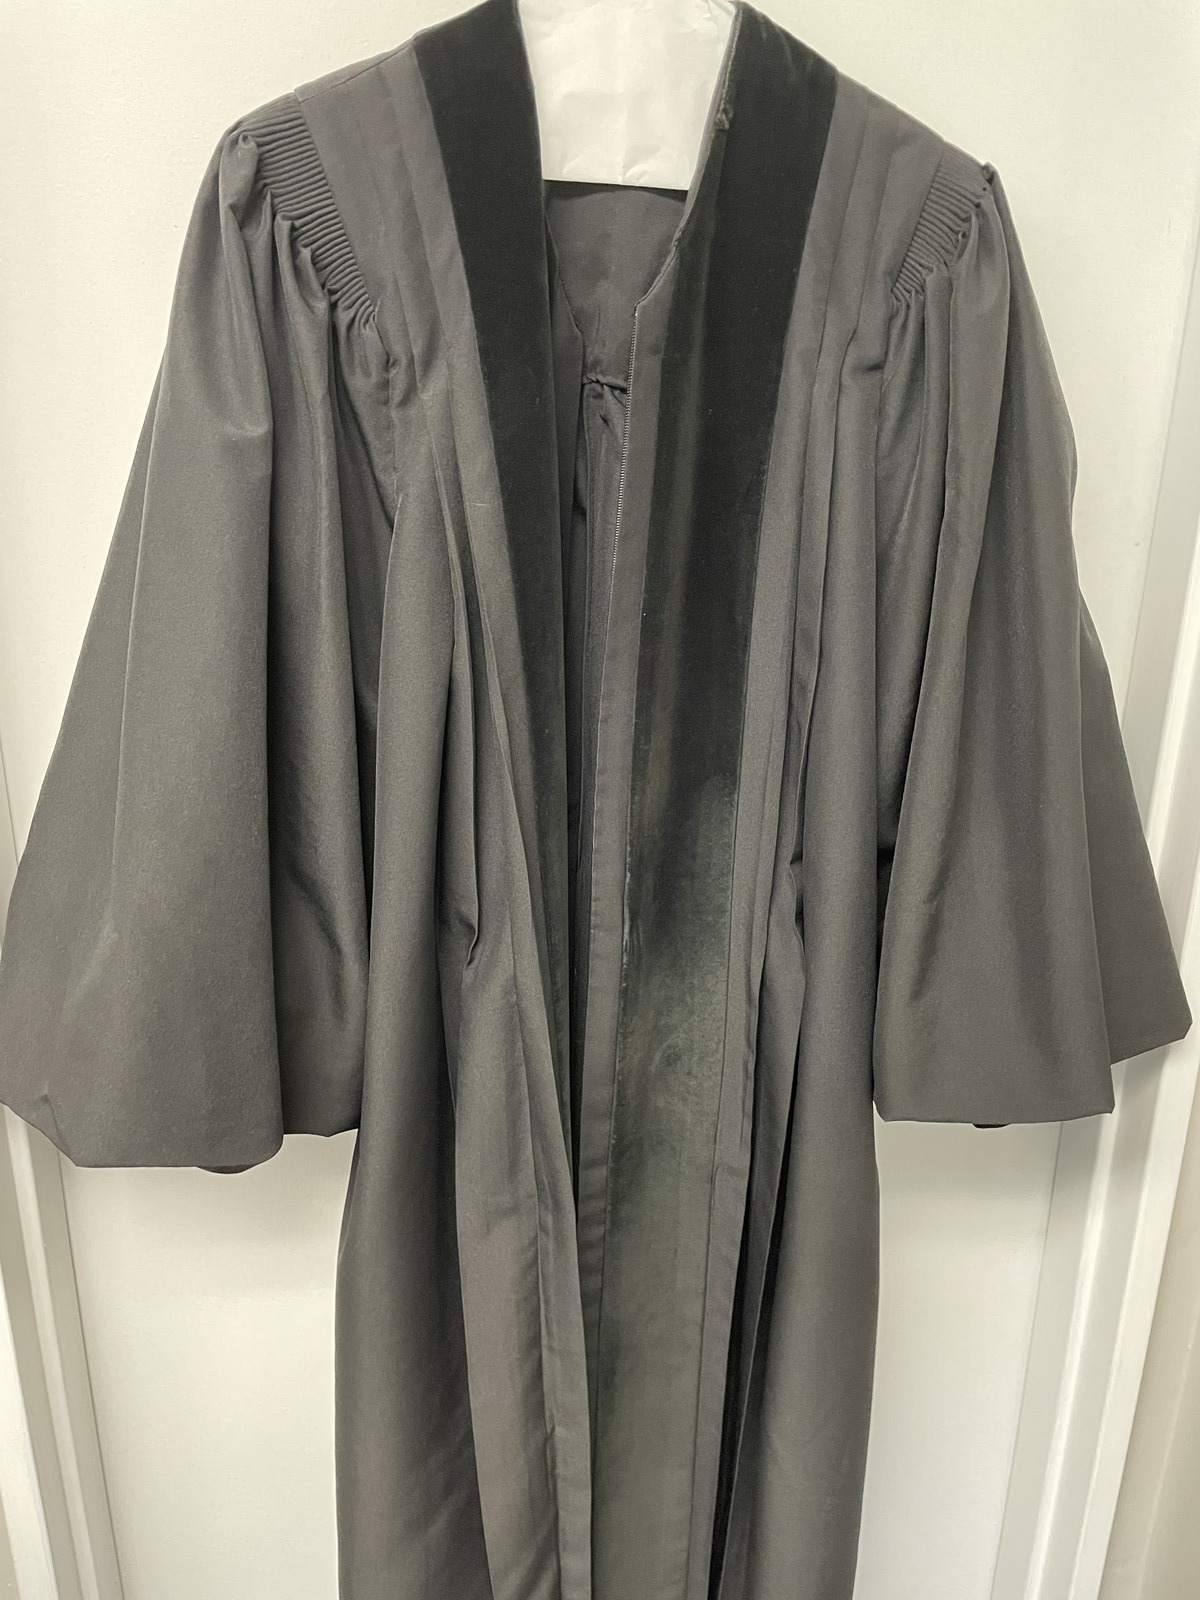 Abbott Hall Clergy/Academic Robe Size L 59